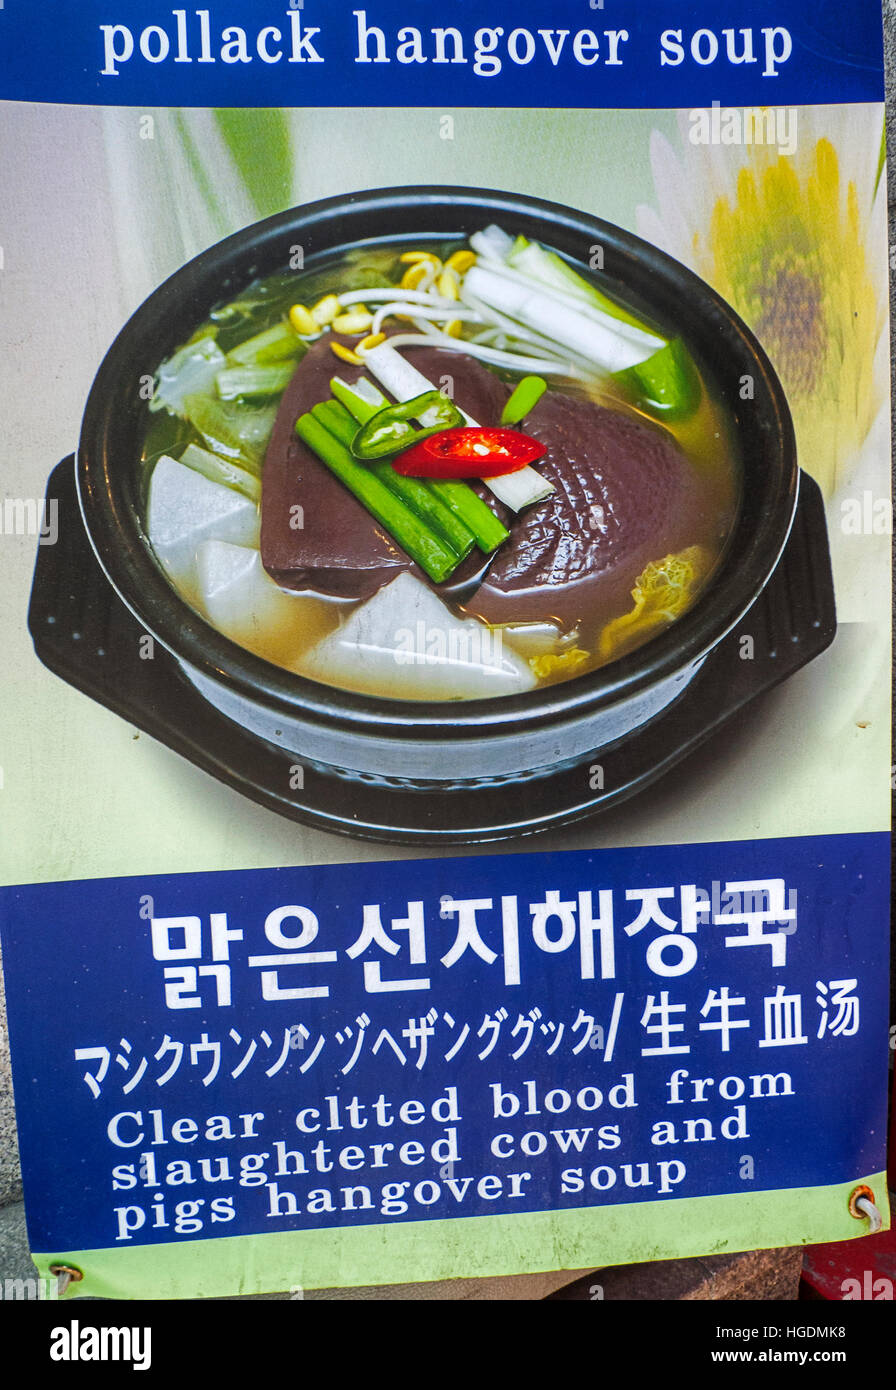 Sign pollock hangover soup Seoul South Korea Stock Photo